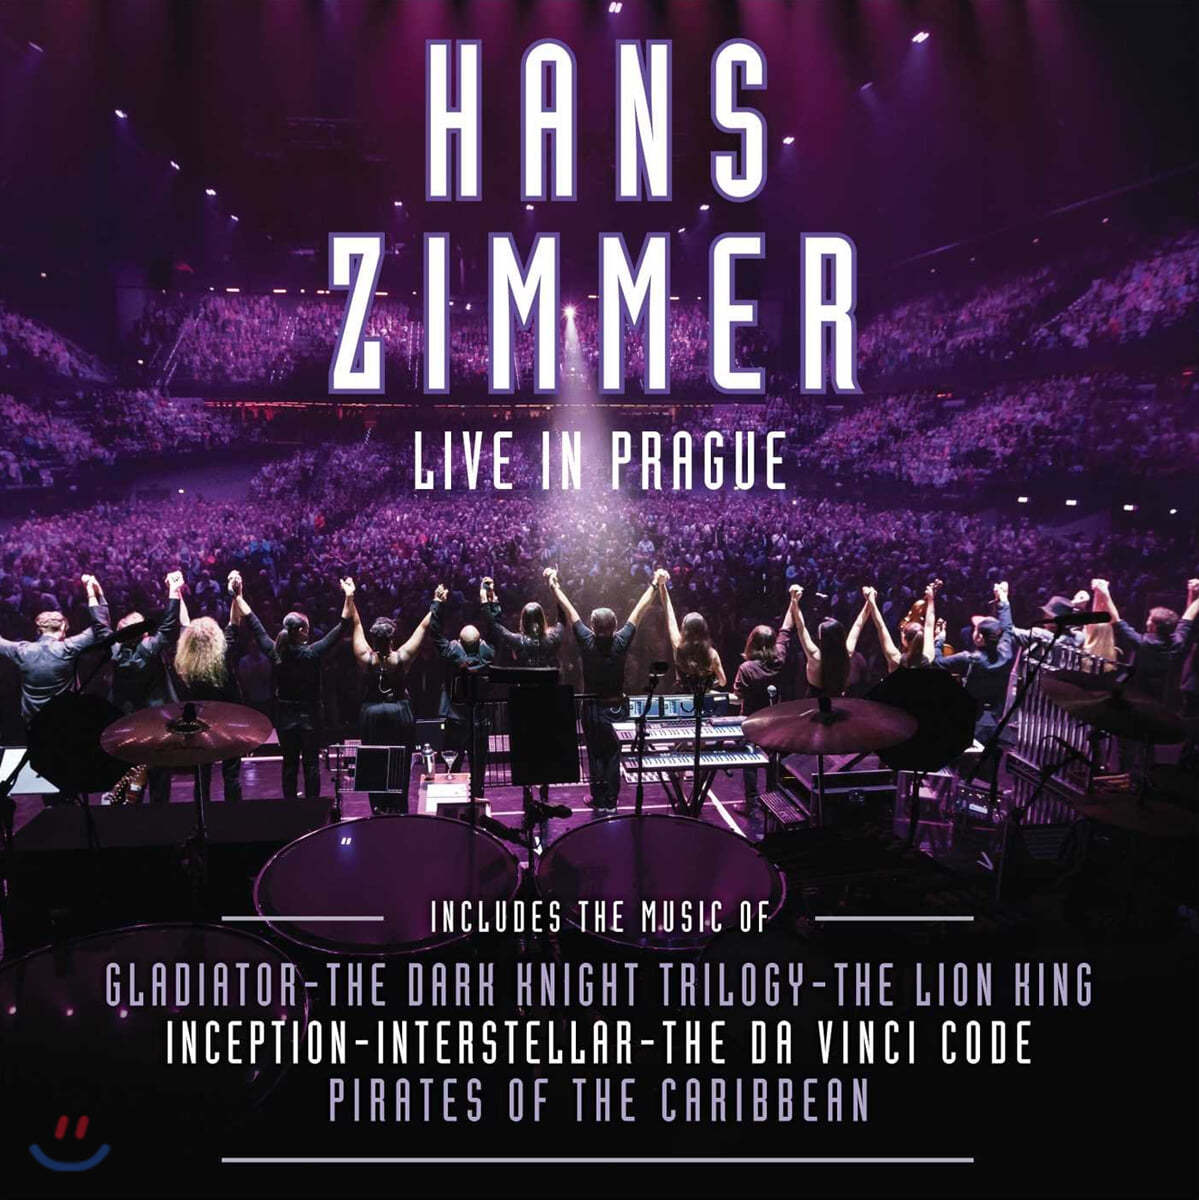 Hans Zimmer - Live In Prague 한스 짐머 2016년 프라하 공연 라이브